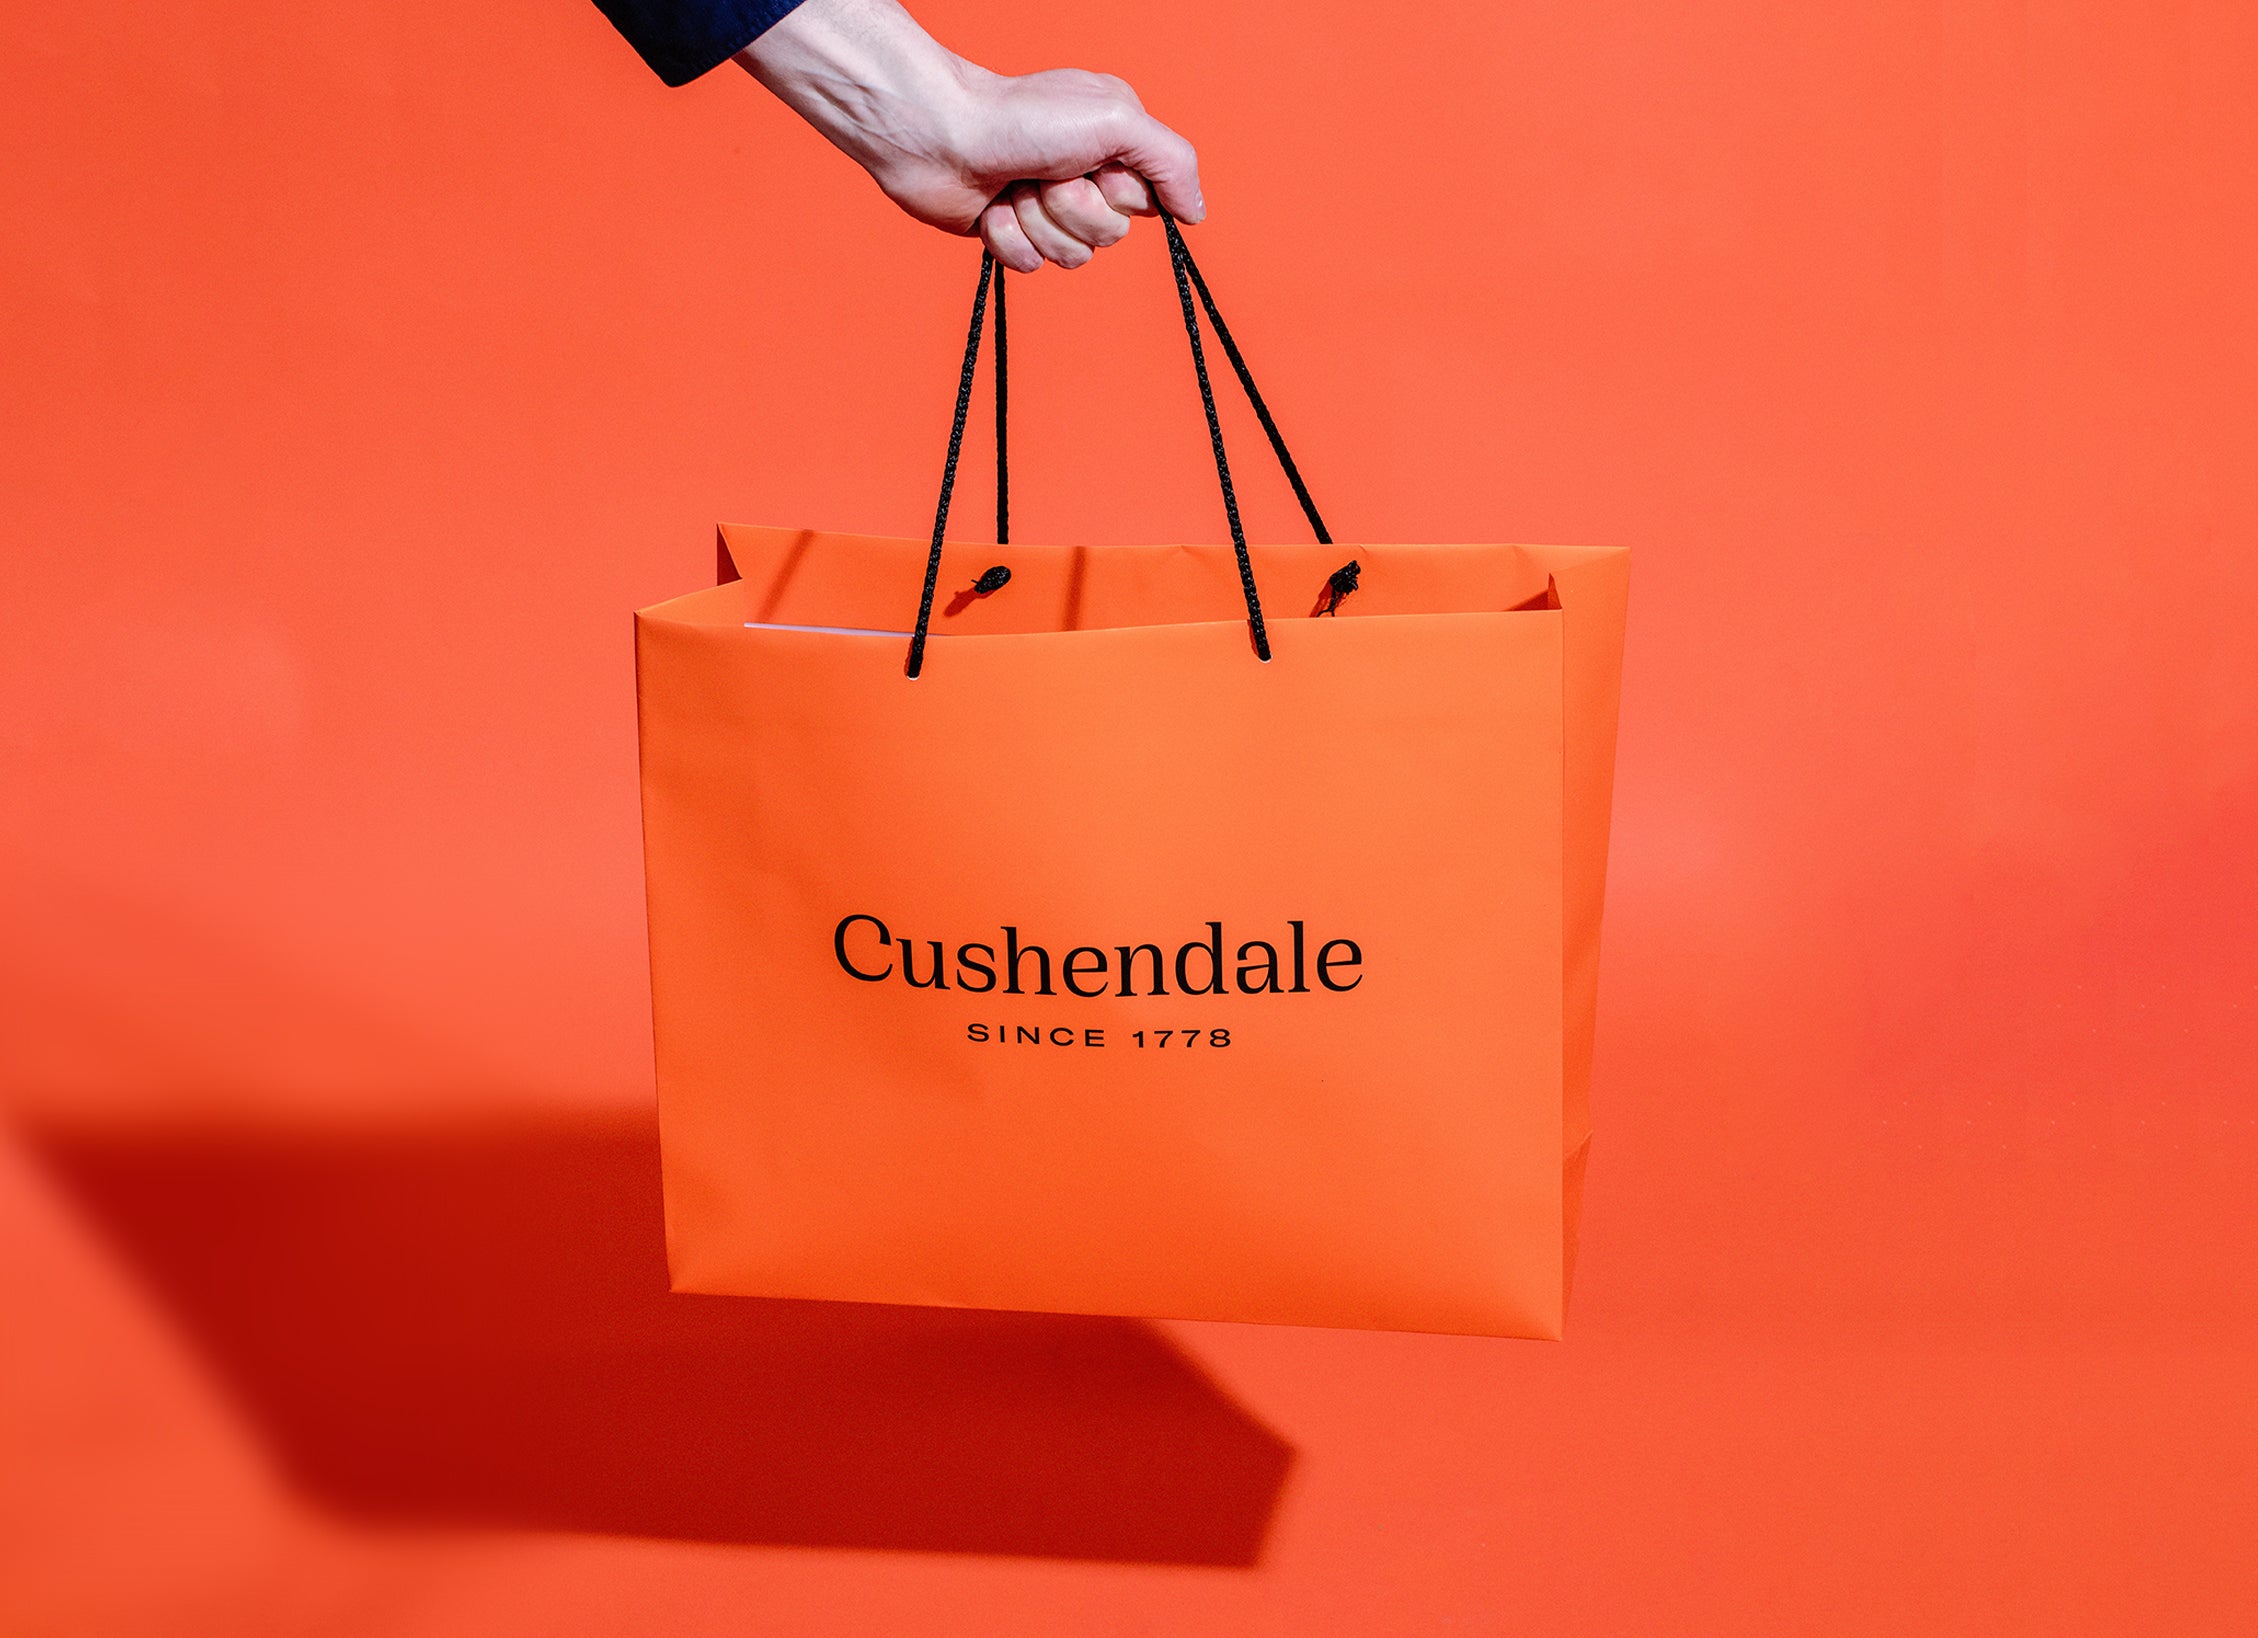 Hand holding a bright orange paper Cushendale shopping bag, against a bright orange background